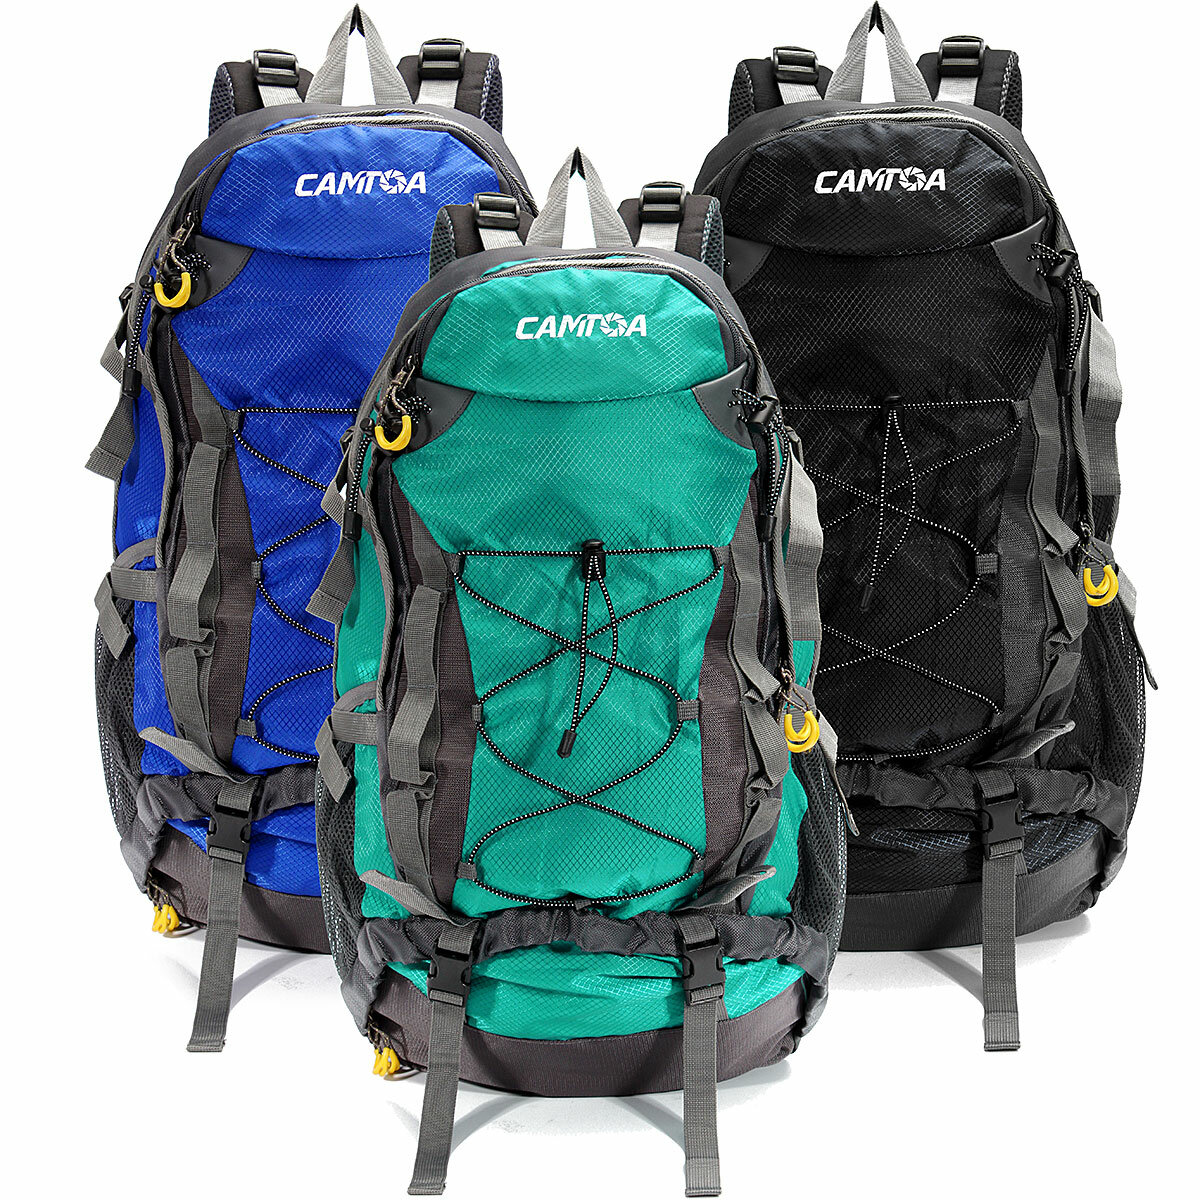 CAMTOA 40L Rucksack Wasserdicht Große Kapazität Outdoor Bergsteigen Camping Reisen Wandern Tasche Schultertasche